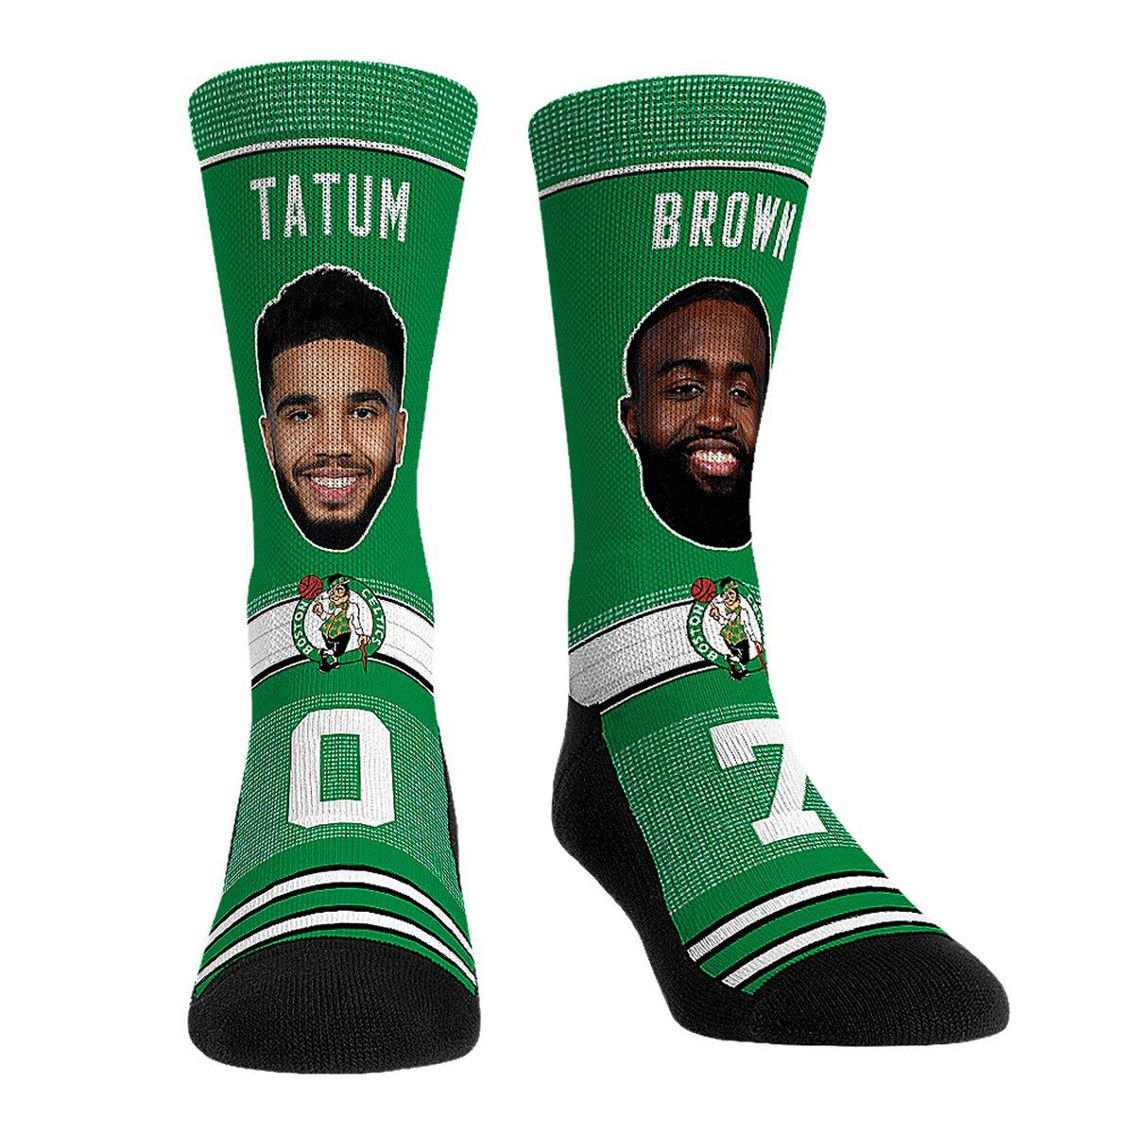 Rock Em Socks Jaylen Brown & Jayson Tatum Boston Celtics Teammates Player Crew Socks - Image 2 of 2